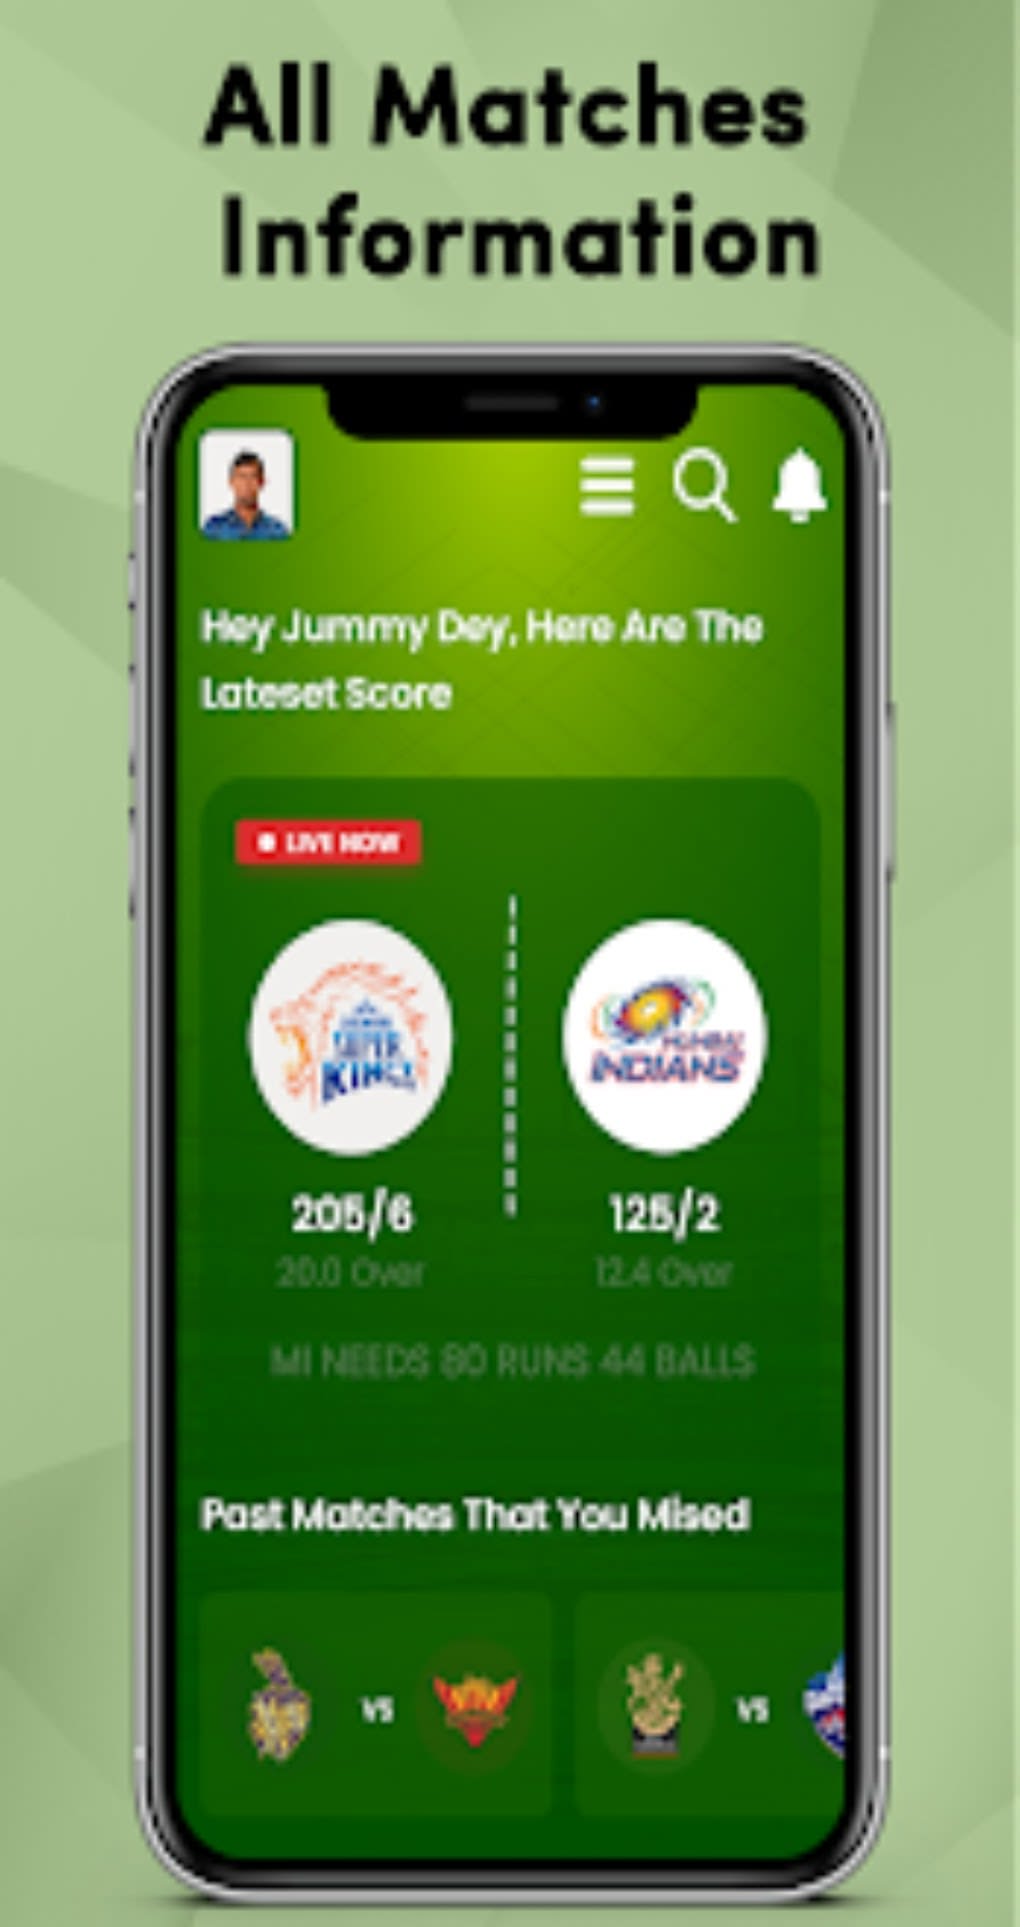 star sports cricket live app